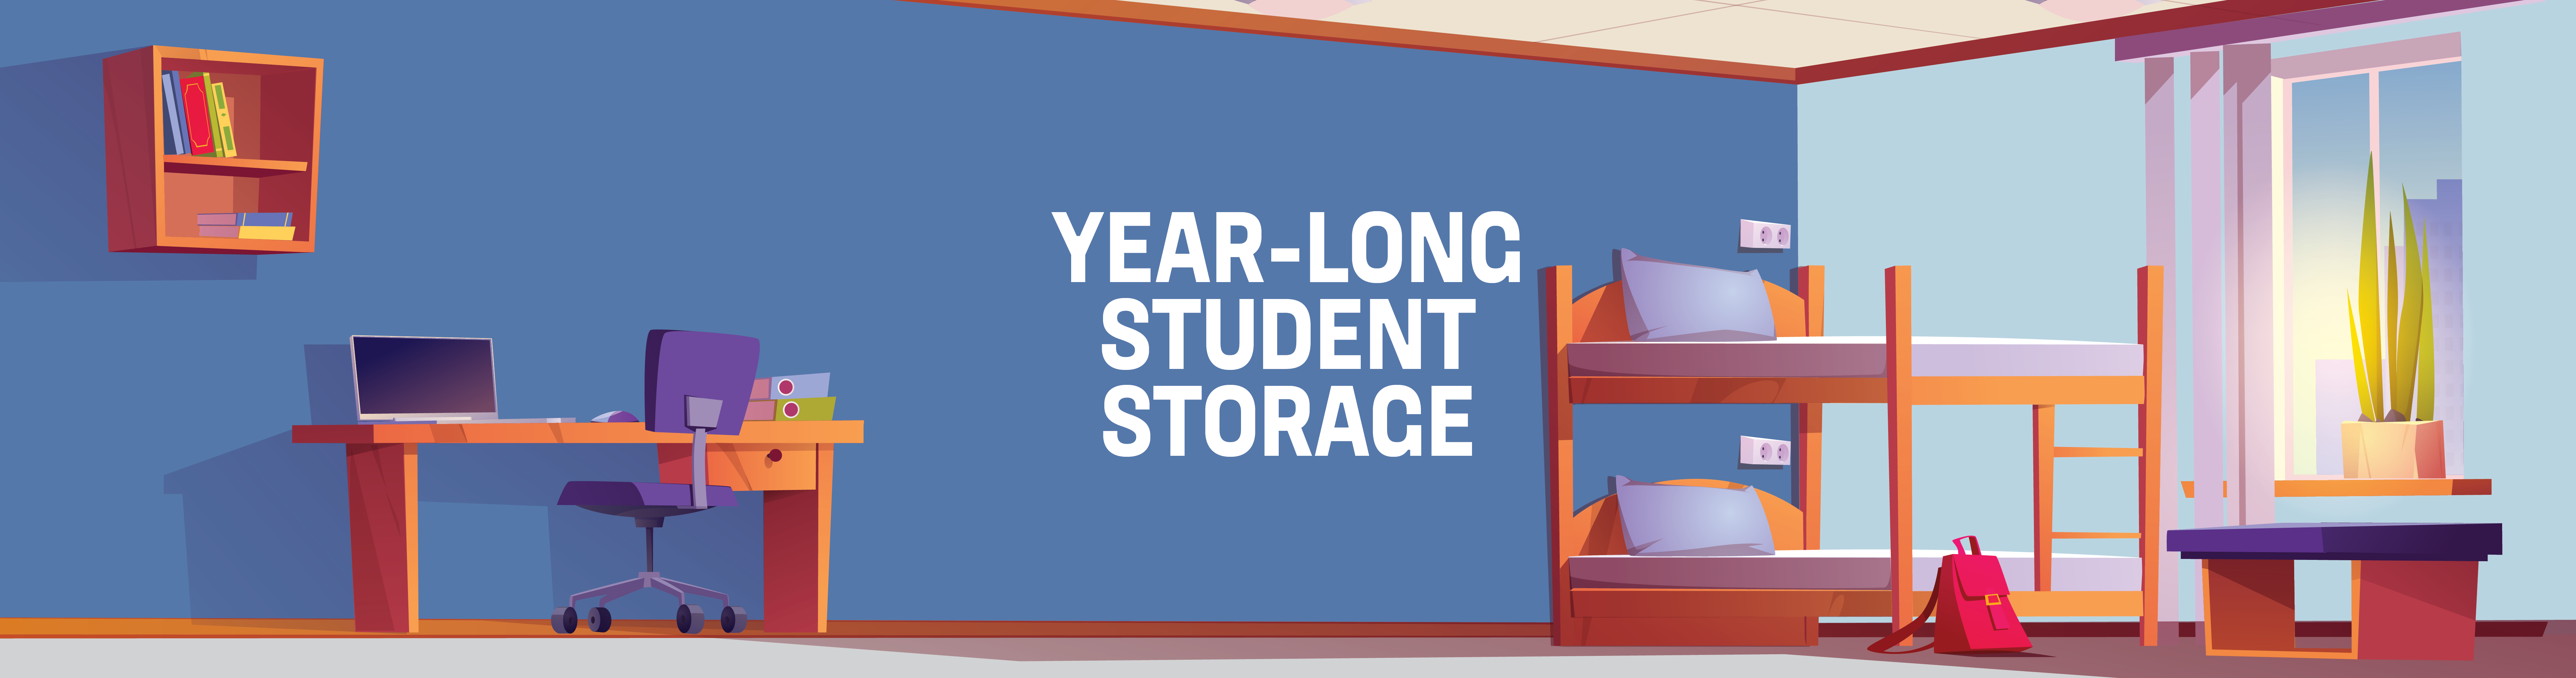 year-long student storage with Hogan Self Storage